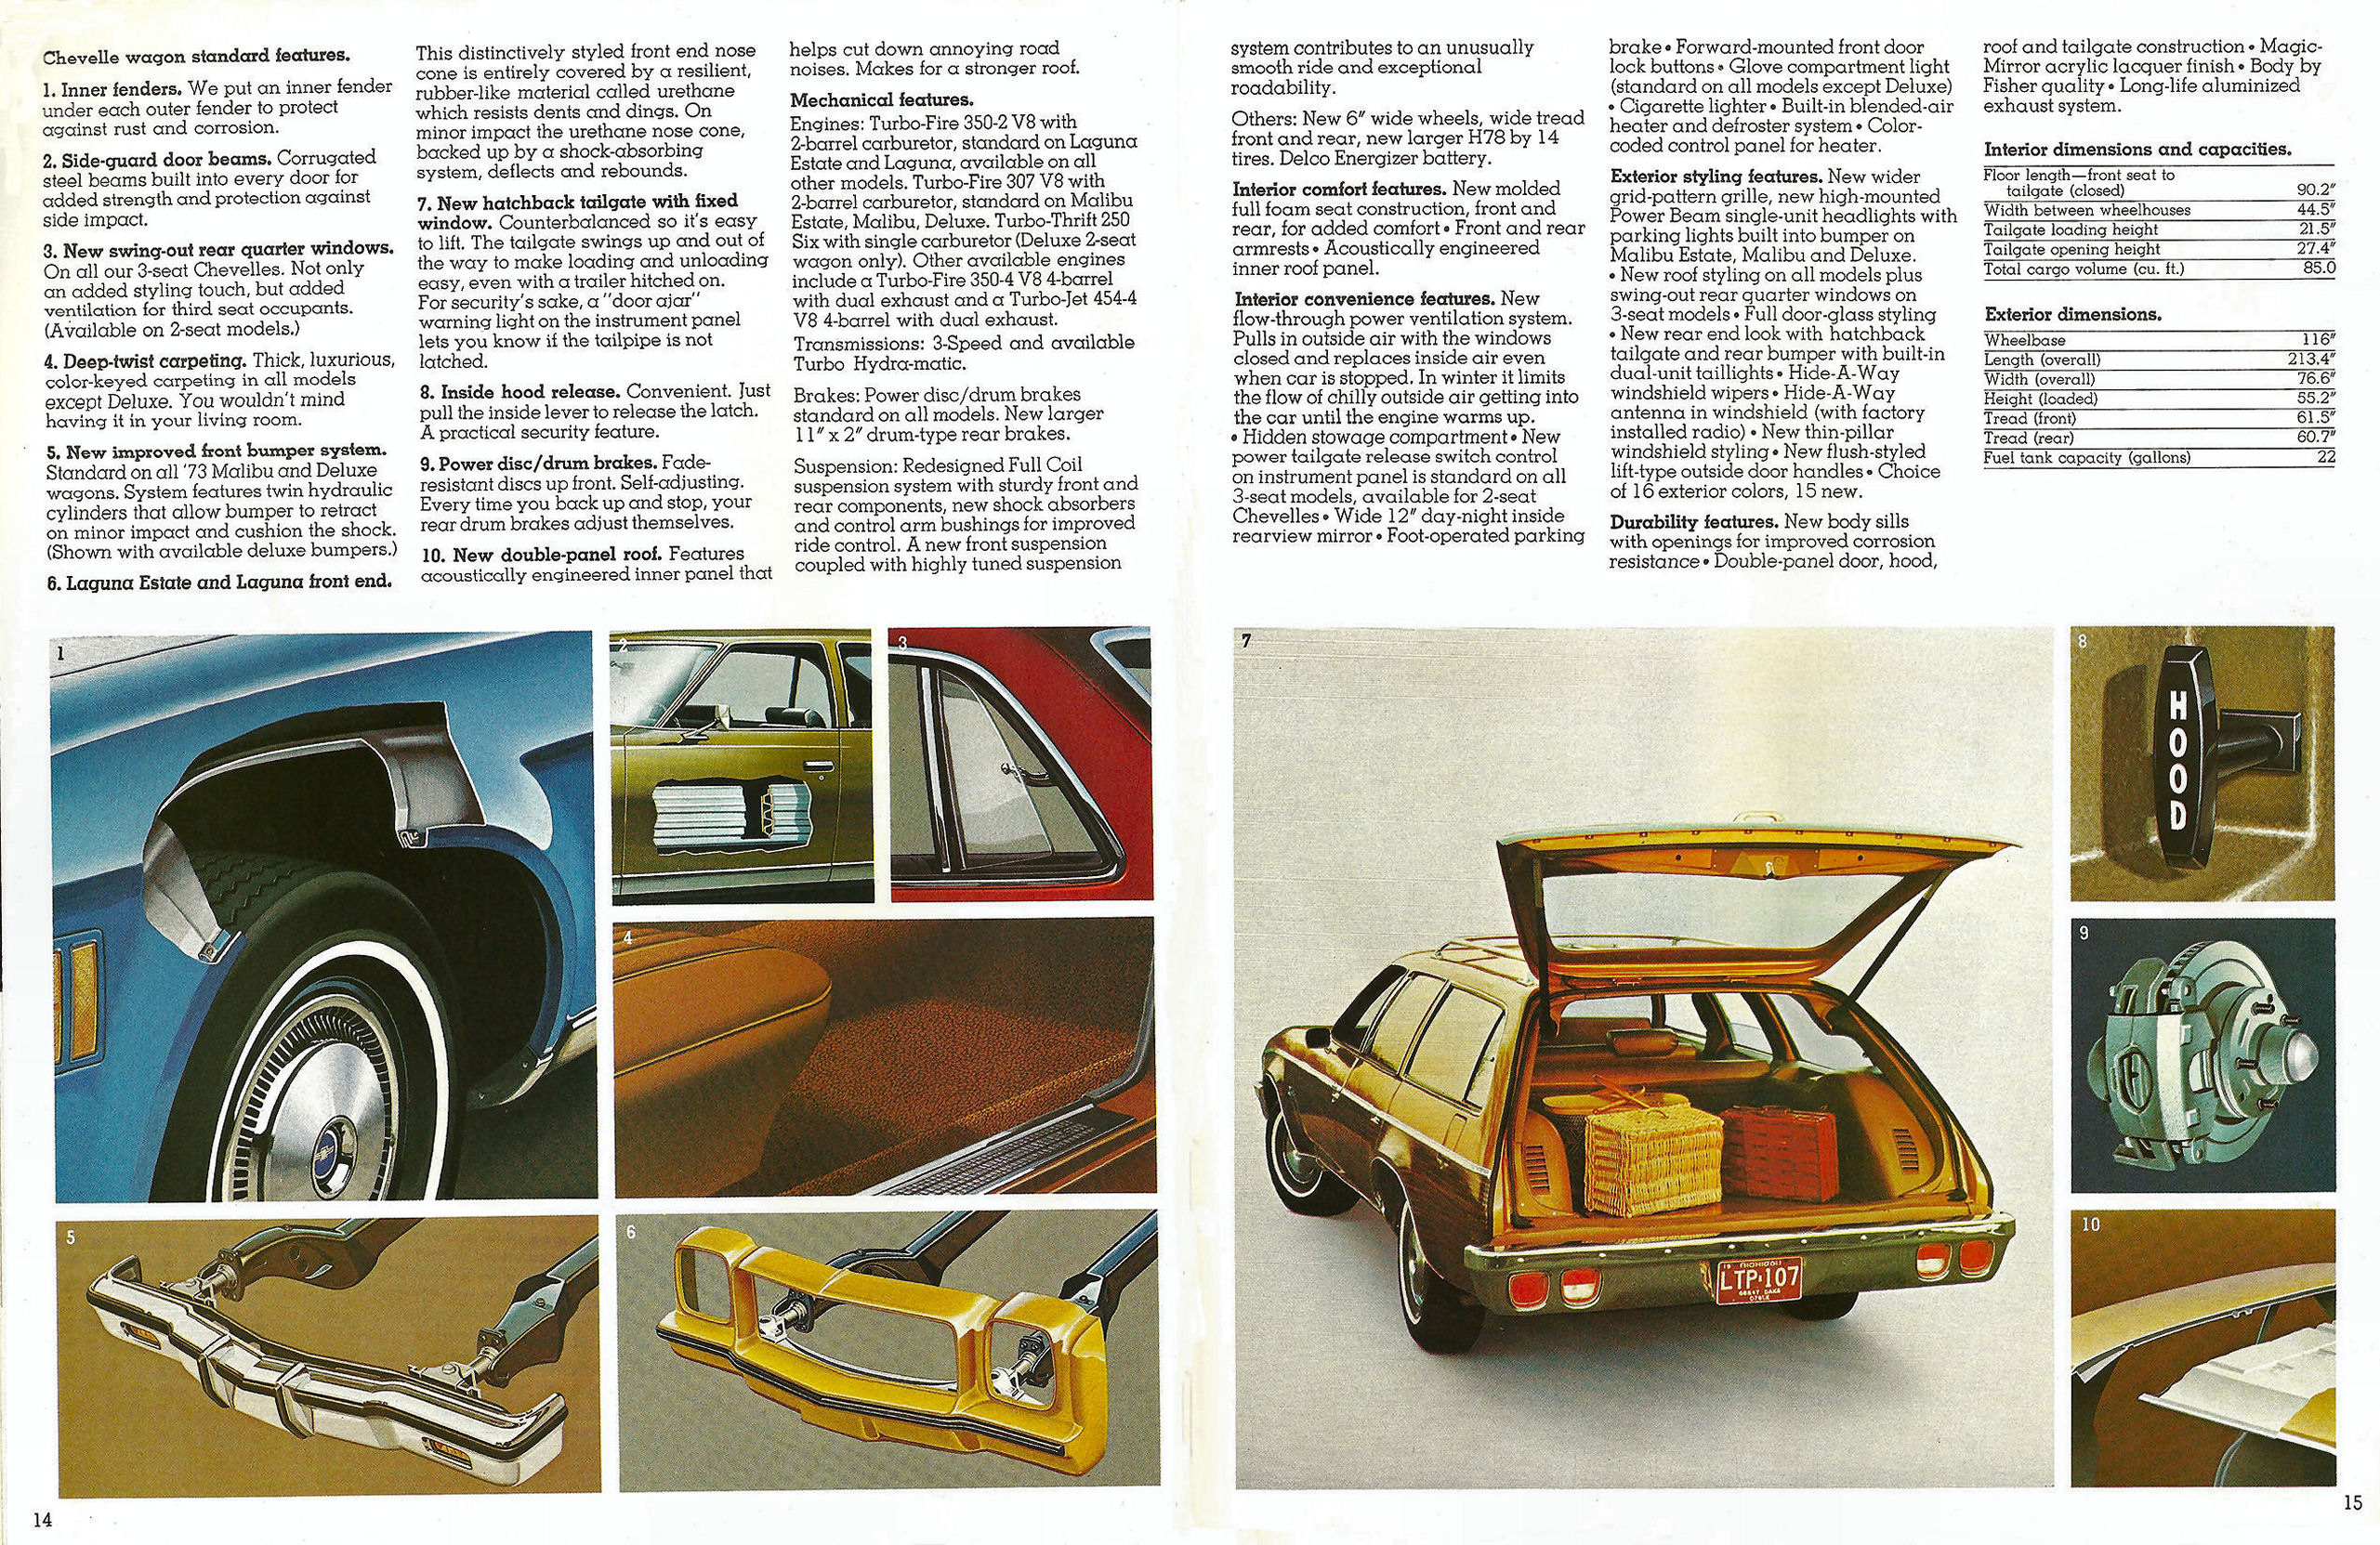 1973_Chevrolet_Wagons-14-15